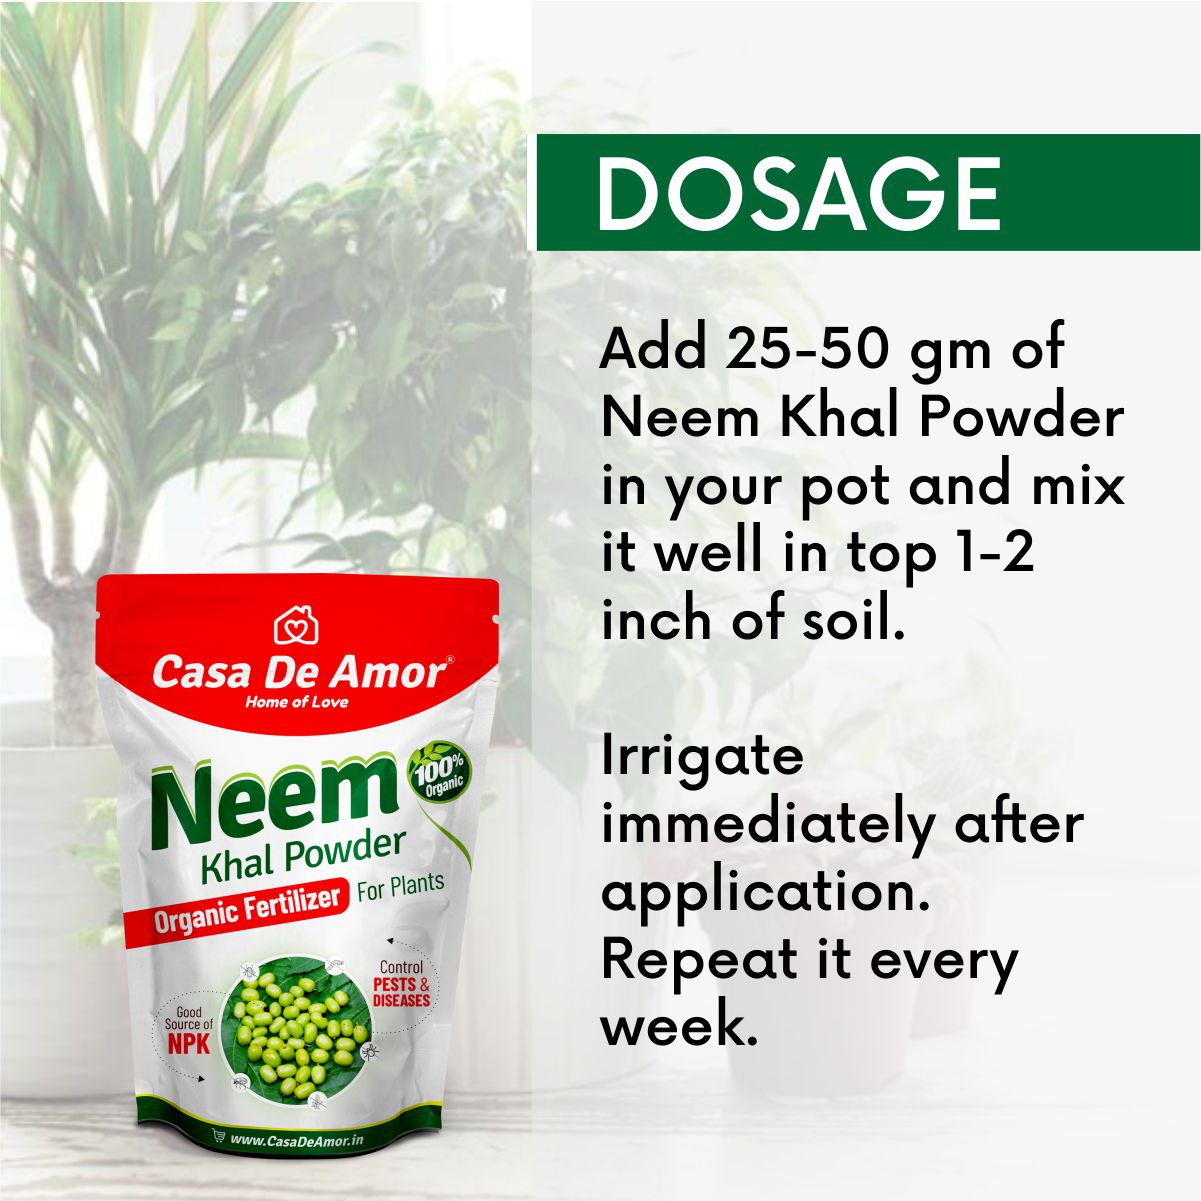 Casa De Amor Special Combo Pack- Neem Khal Powder (900 gm) + Pure Neem Oil (200 ml)